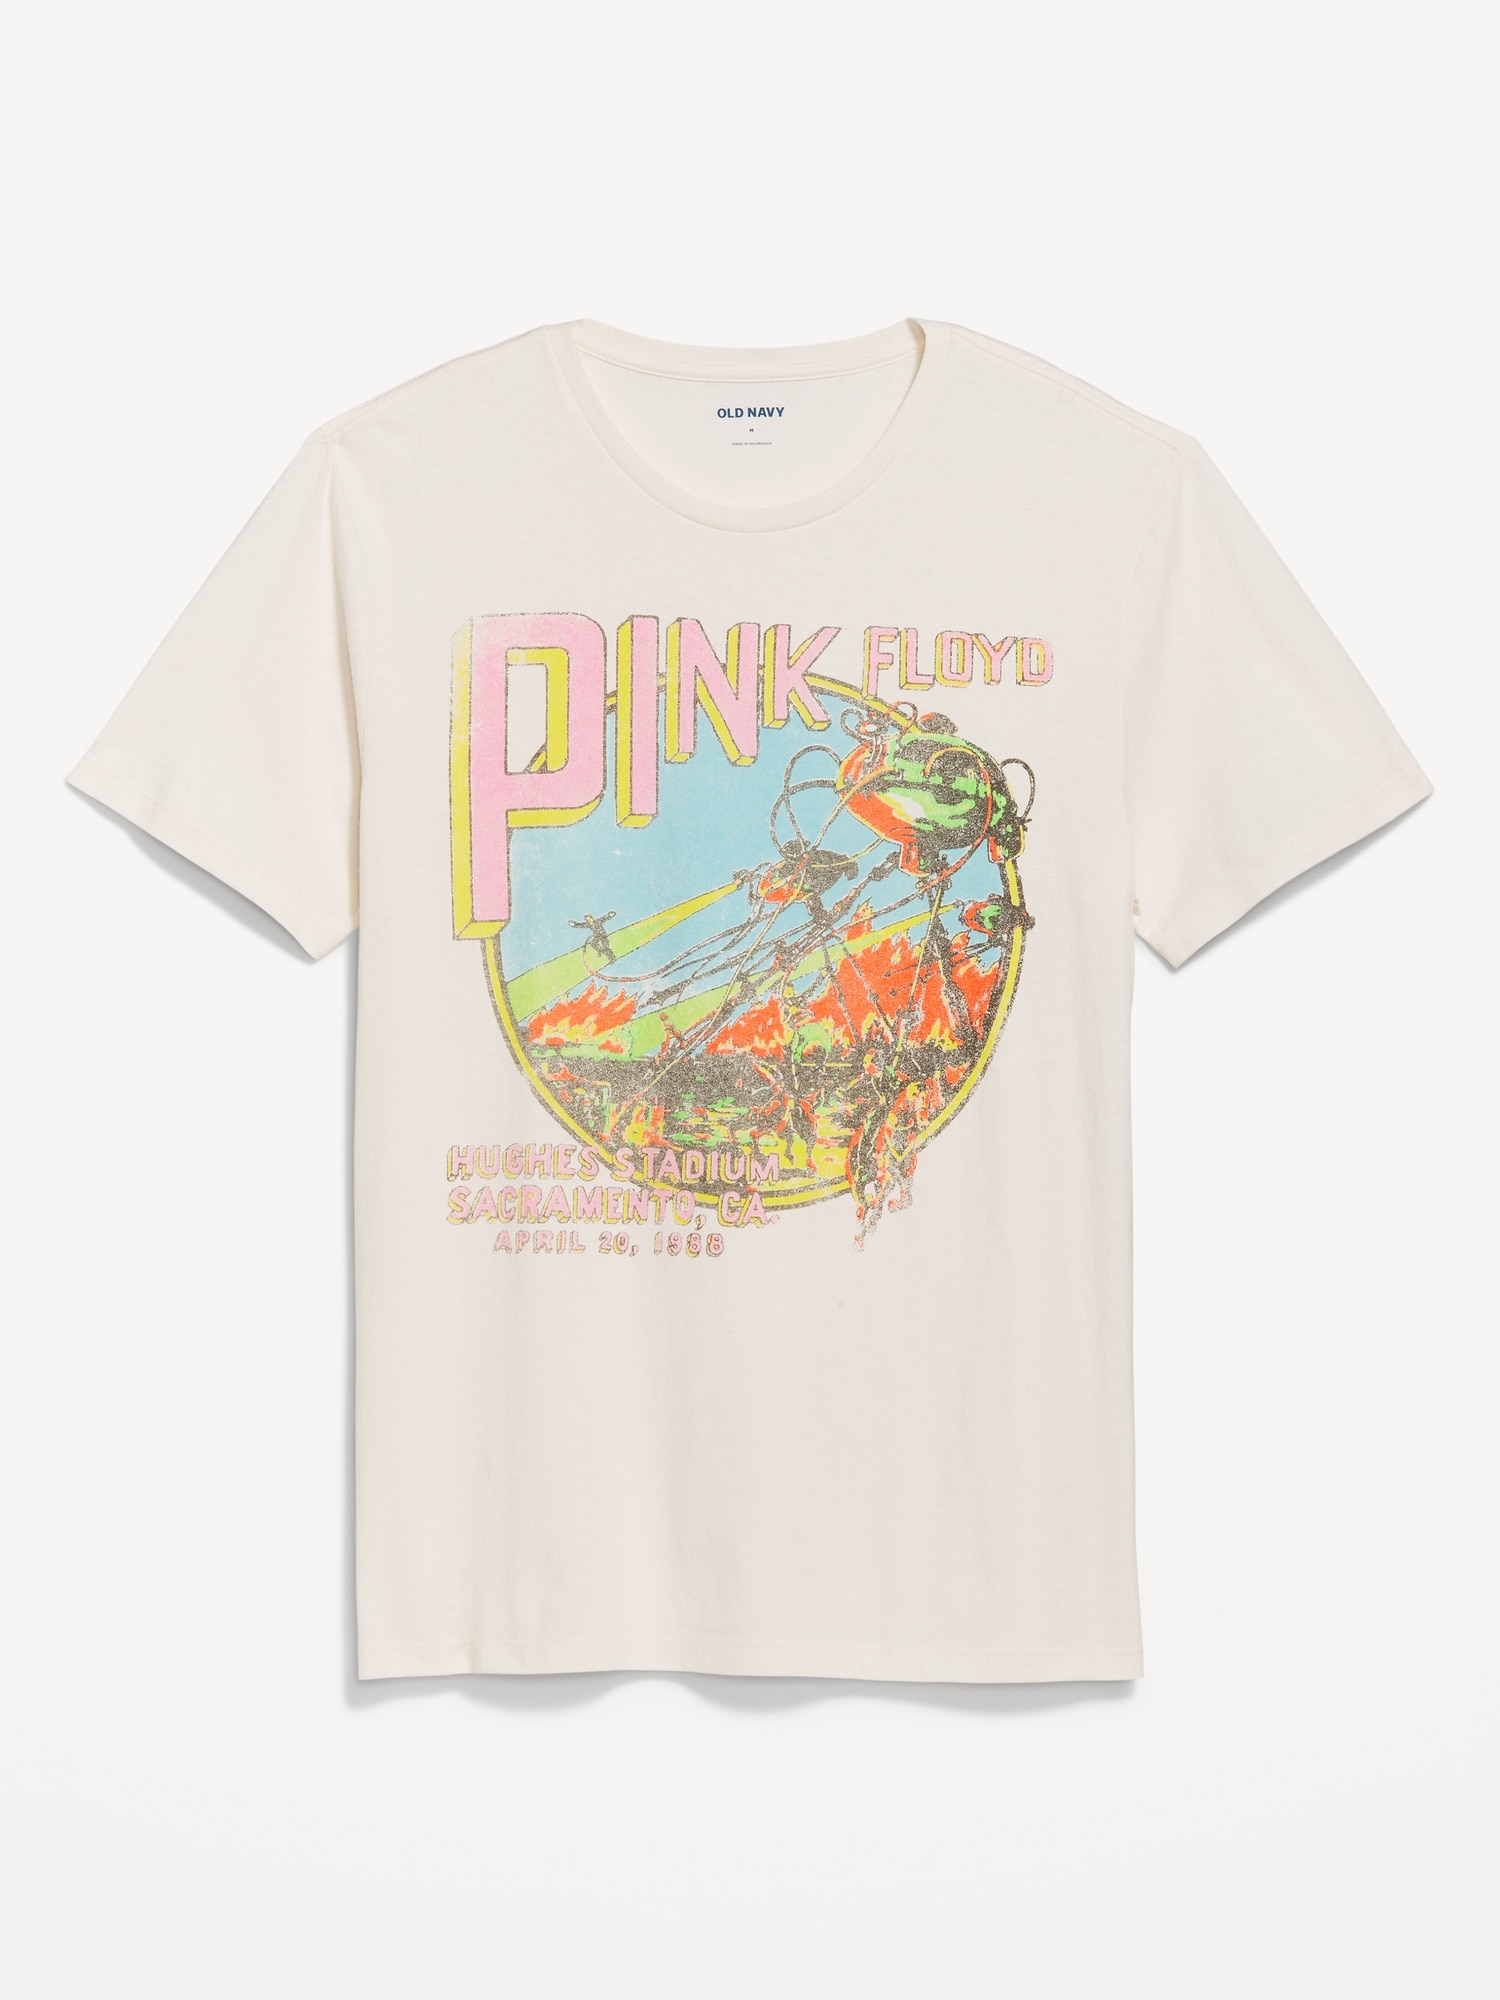 Pink Floyd™ T-Shirt